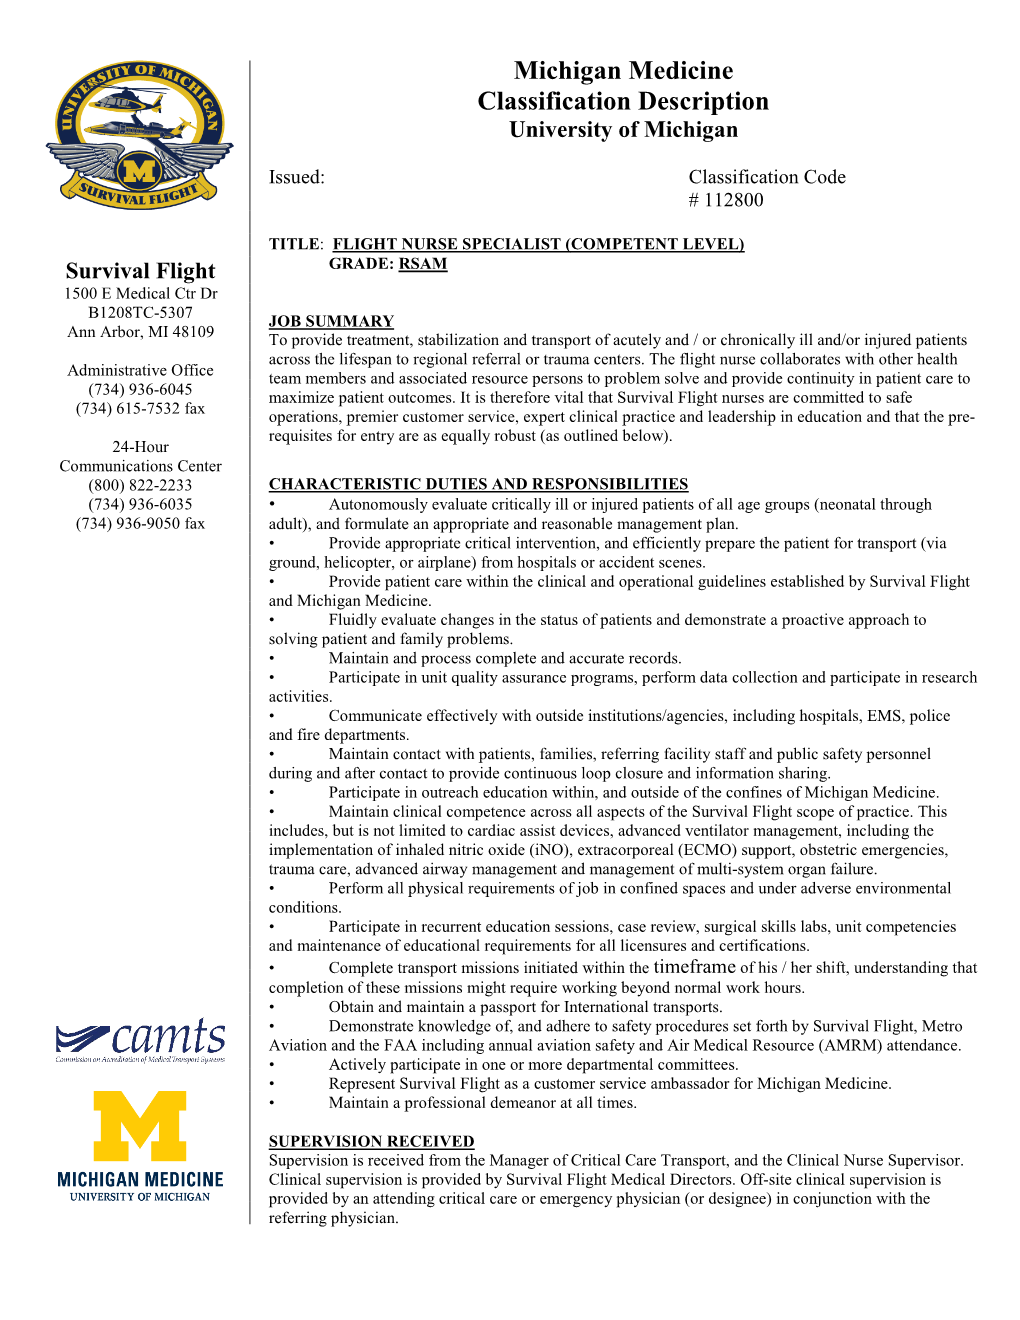 Michigan Medicine Classification Description University of Michigan